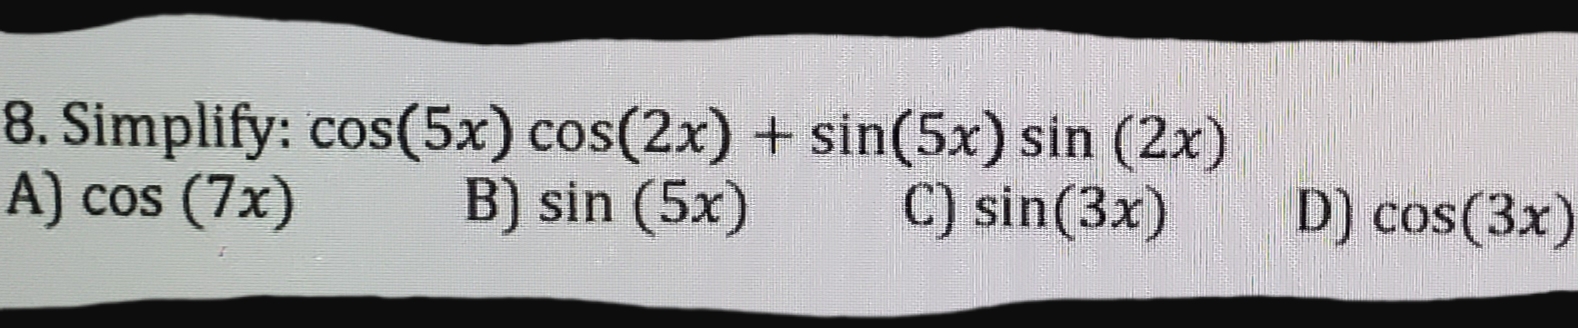 8. Simplify: cos(5x) cos(2x) + sin(5x) sin (2x)
B) sin (5x)
cos (7x)
C) sin(3x)
D) cos(3x)
CoS
